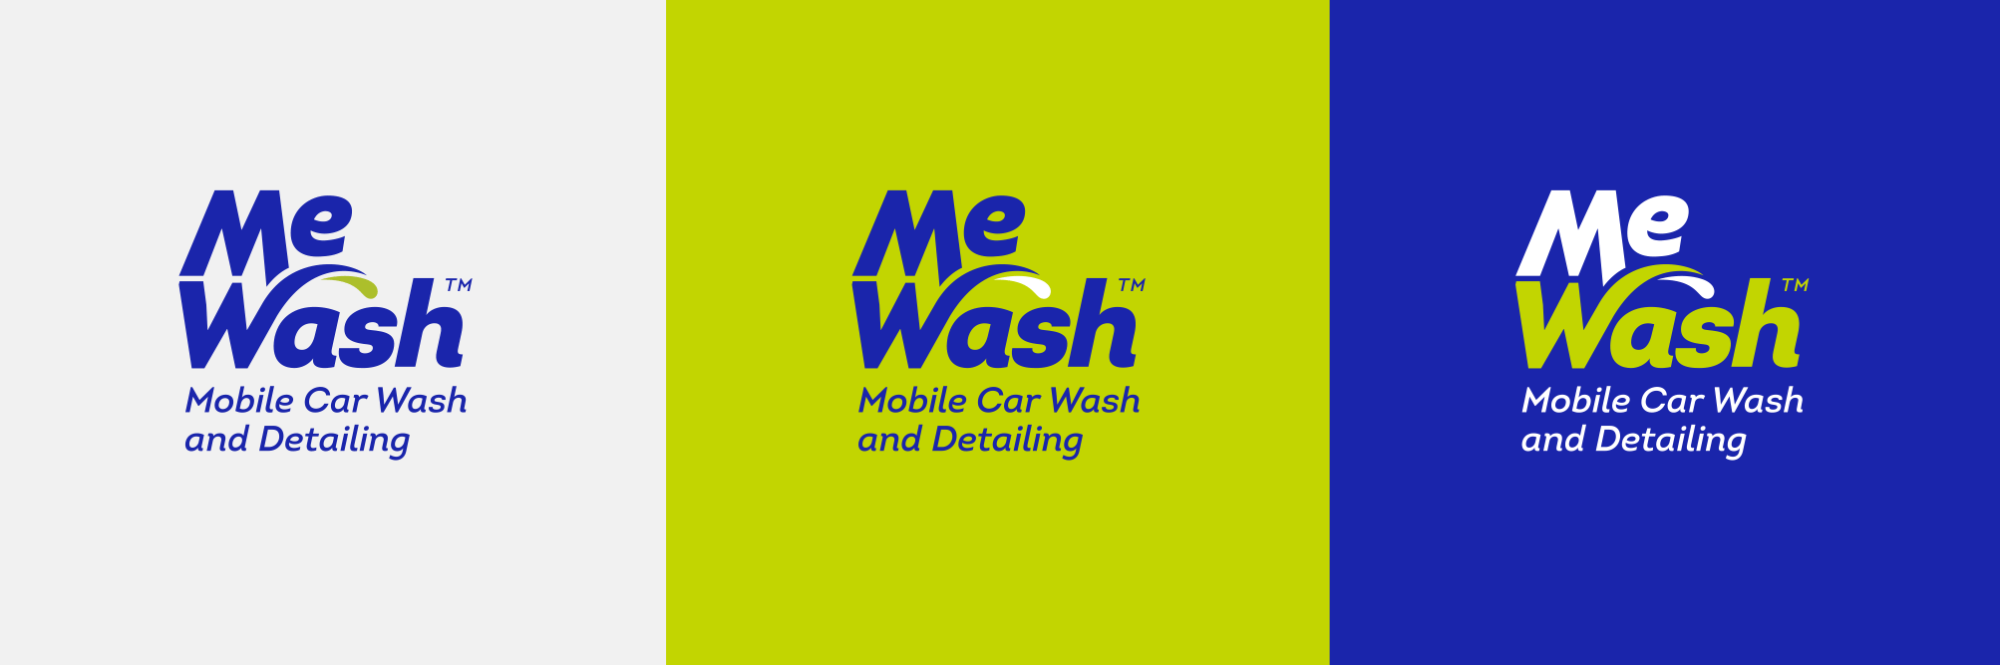 MeWash vertical format logos